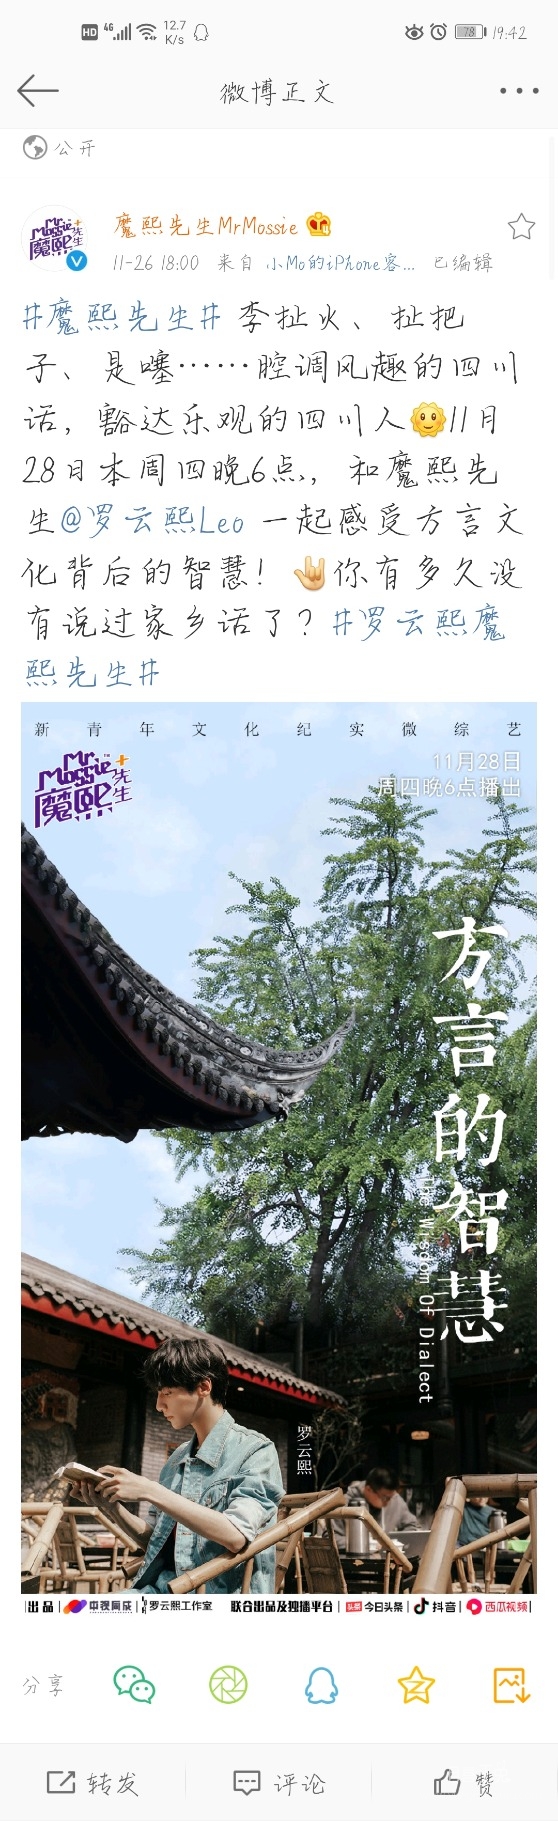 Screenshot_20191126_194212_com.sina.weibo.jpg